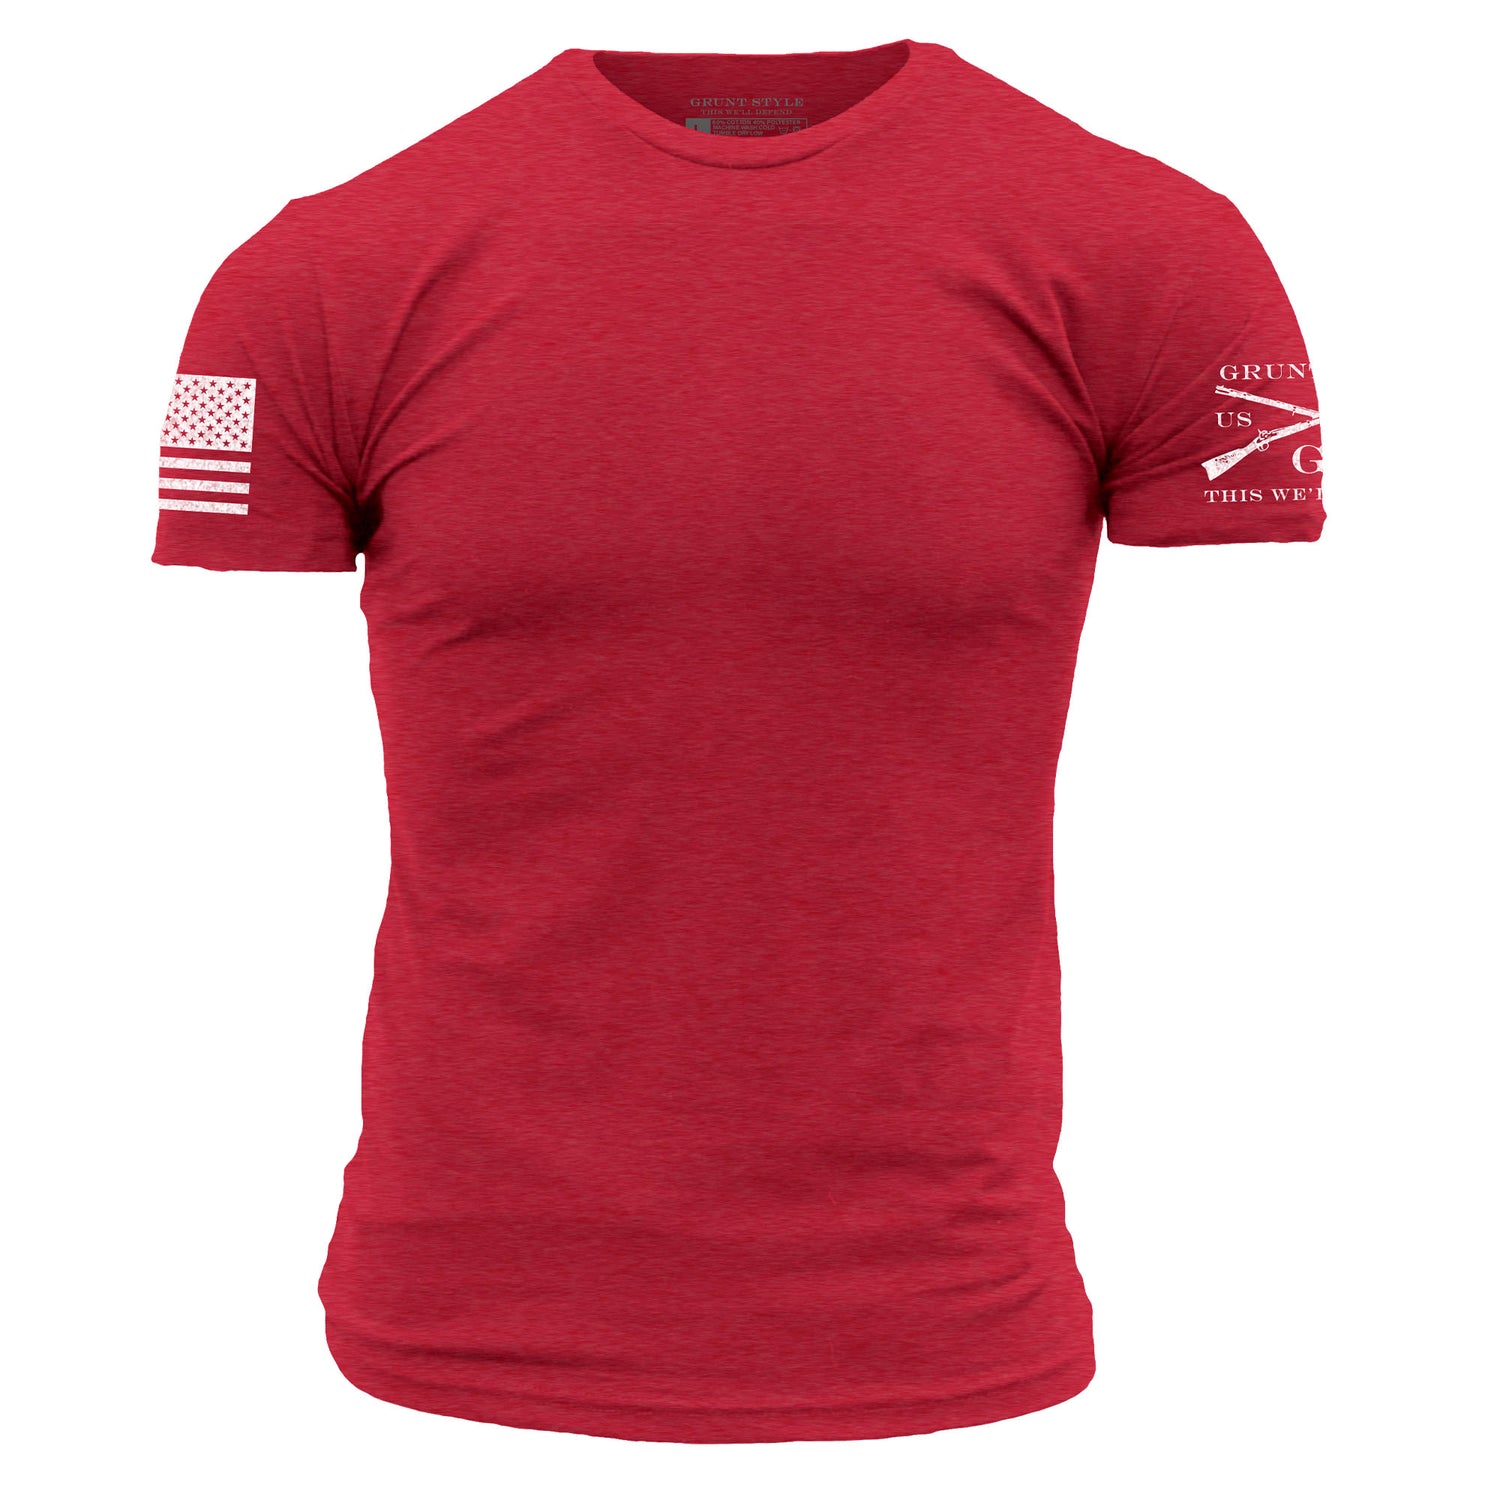 Patriotic T-Shirt - Men's Patriotic Shirt 